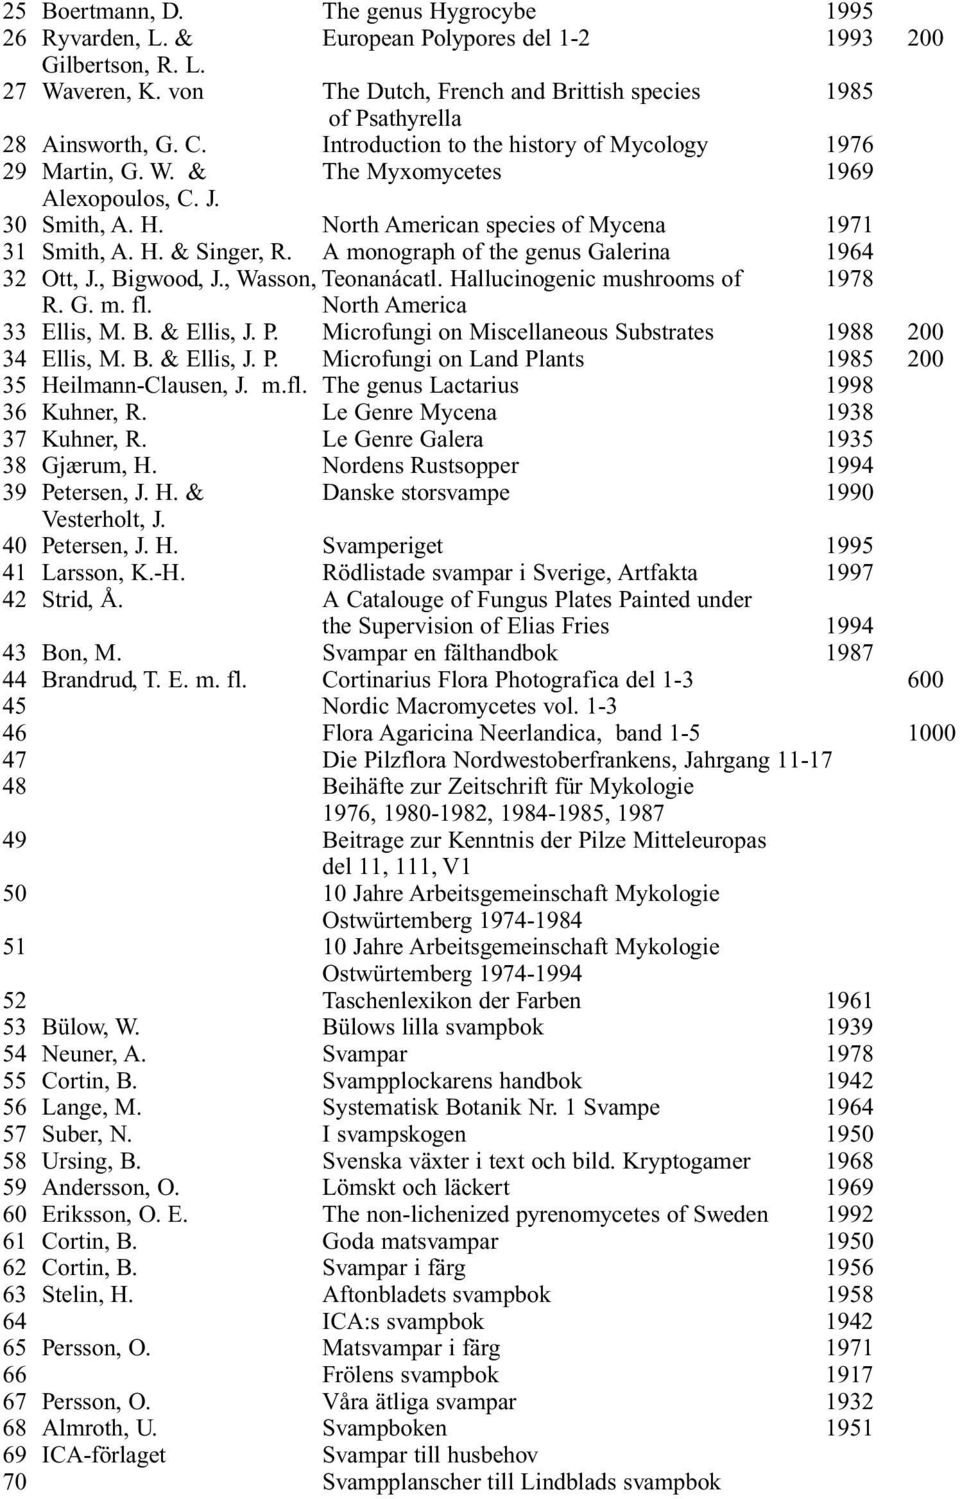 H. North American species of Mycena 1971 31 Smith, A. H. & Singer, R. A monograph of the genus Galerina 1964 32 Ott, J., Bigwood, J., Wasson, Teonanácatl. Hallucinogenic mushrooms of 1978 R. G. m. fl.